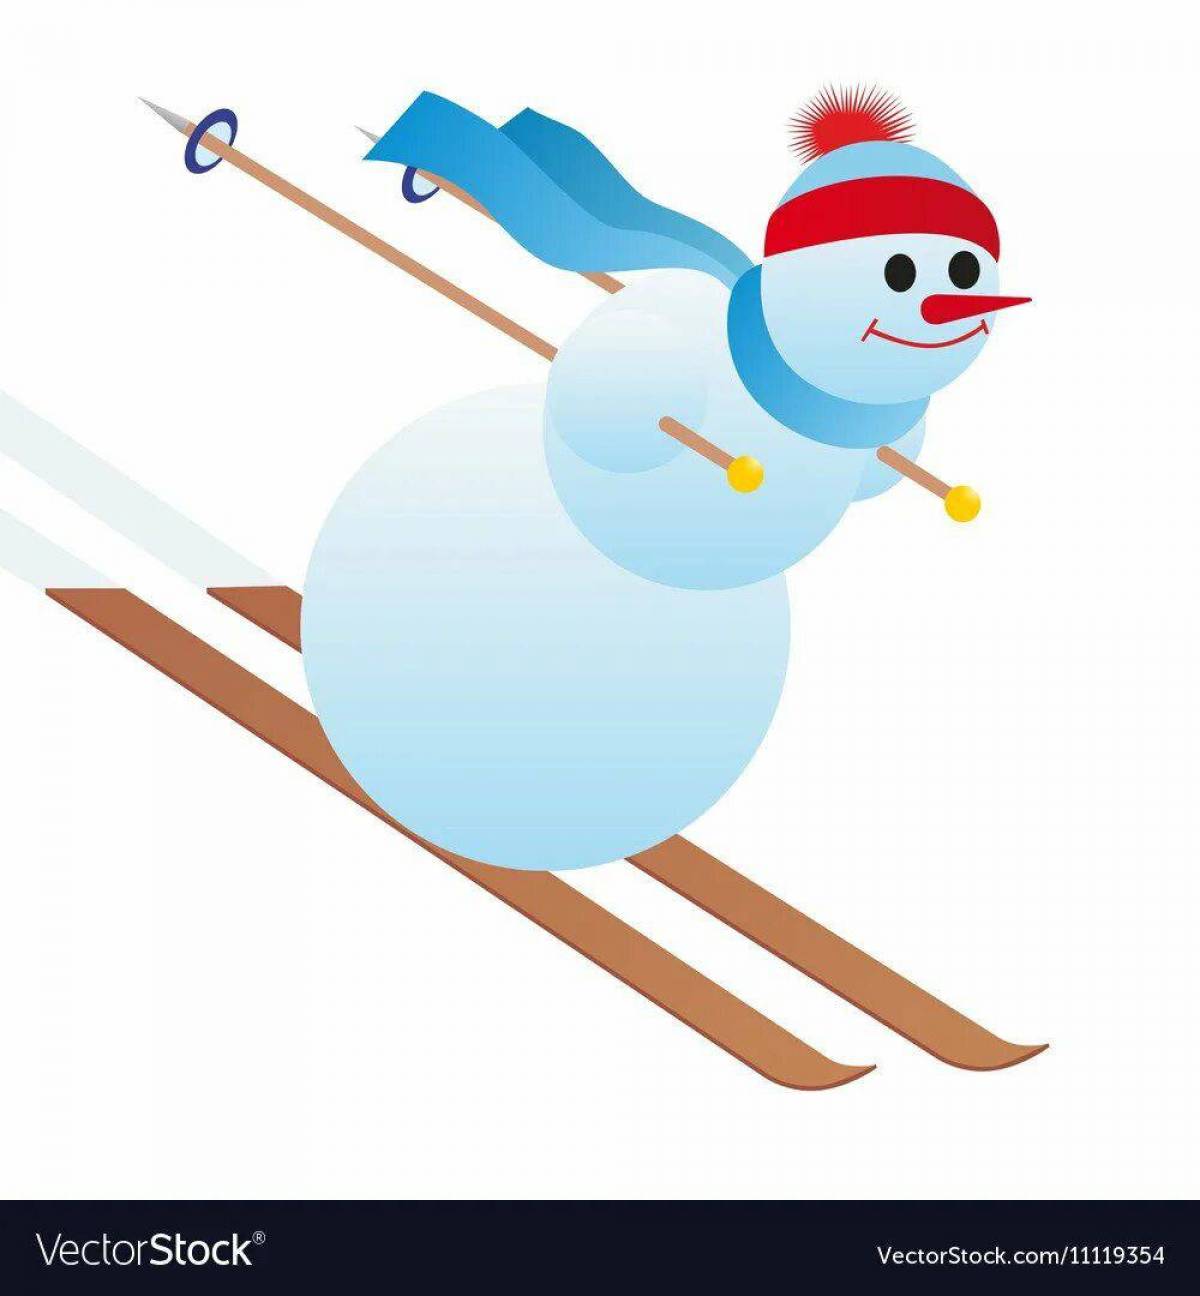 Снеговик на лыжах #23